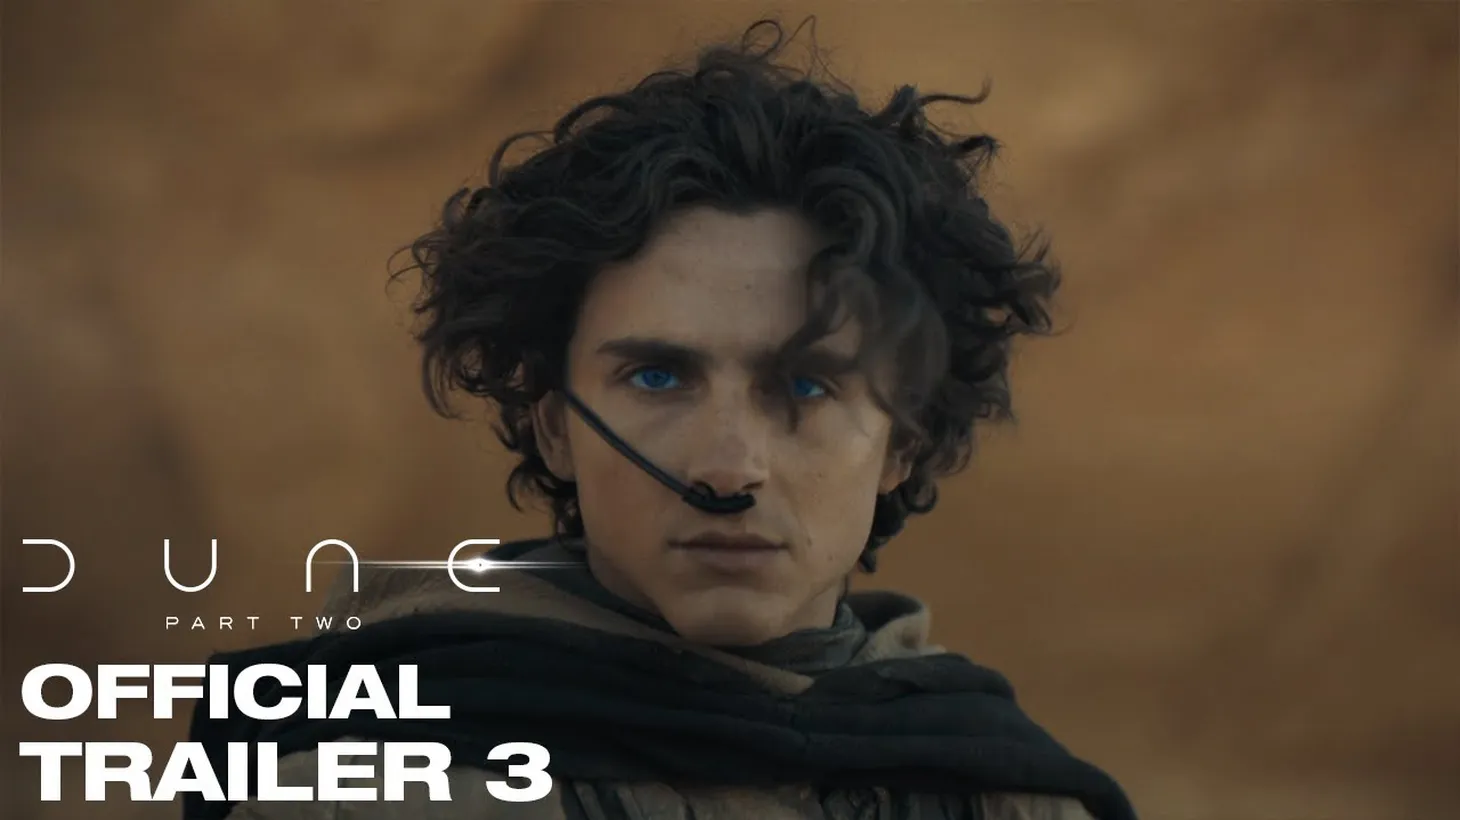 “Dune: Part 2” stars Timothee Chalamet, Zendaya, and Austin Butler.